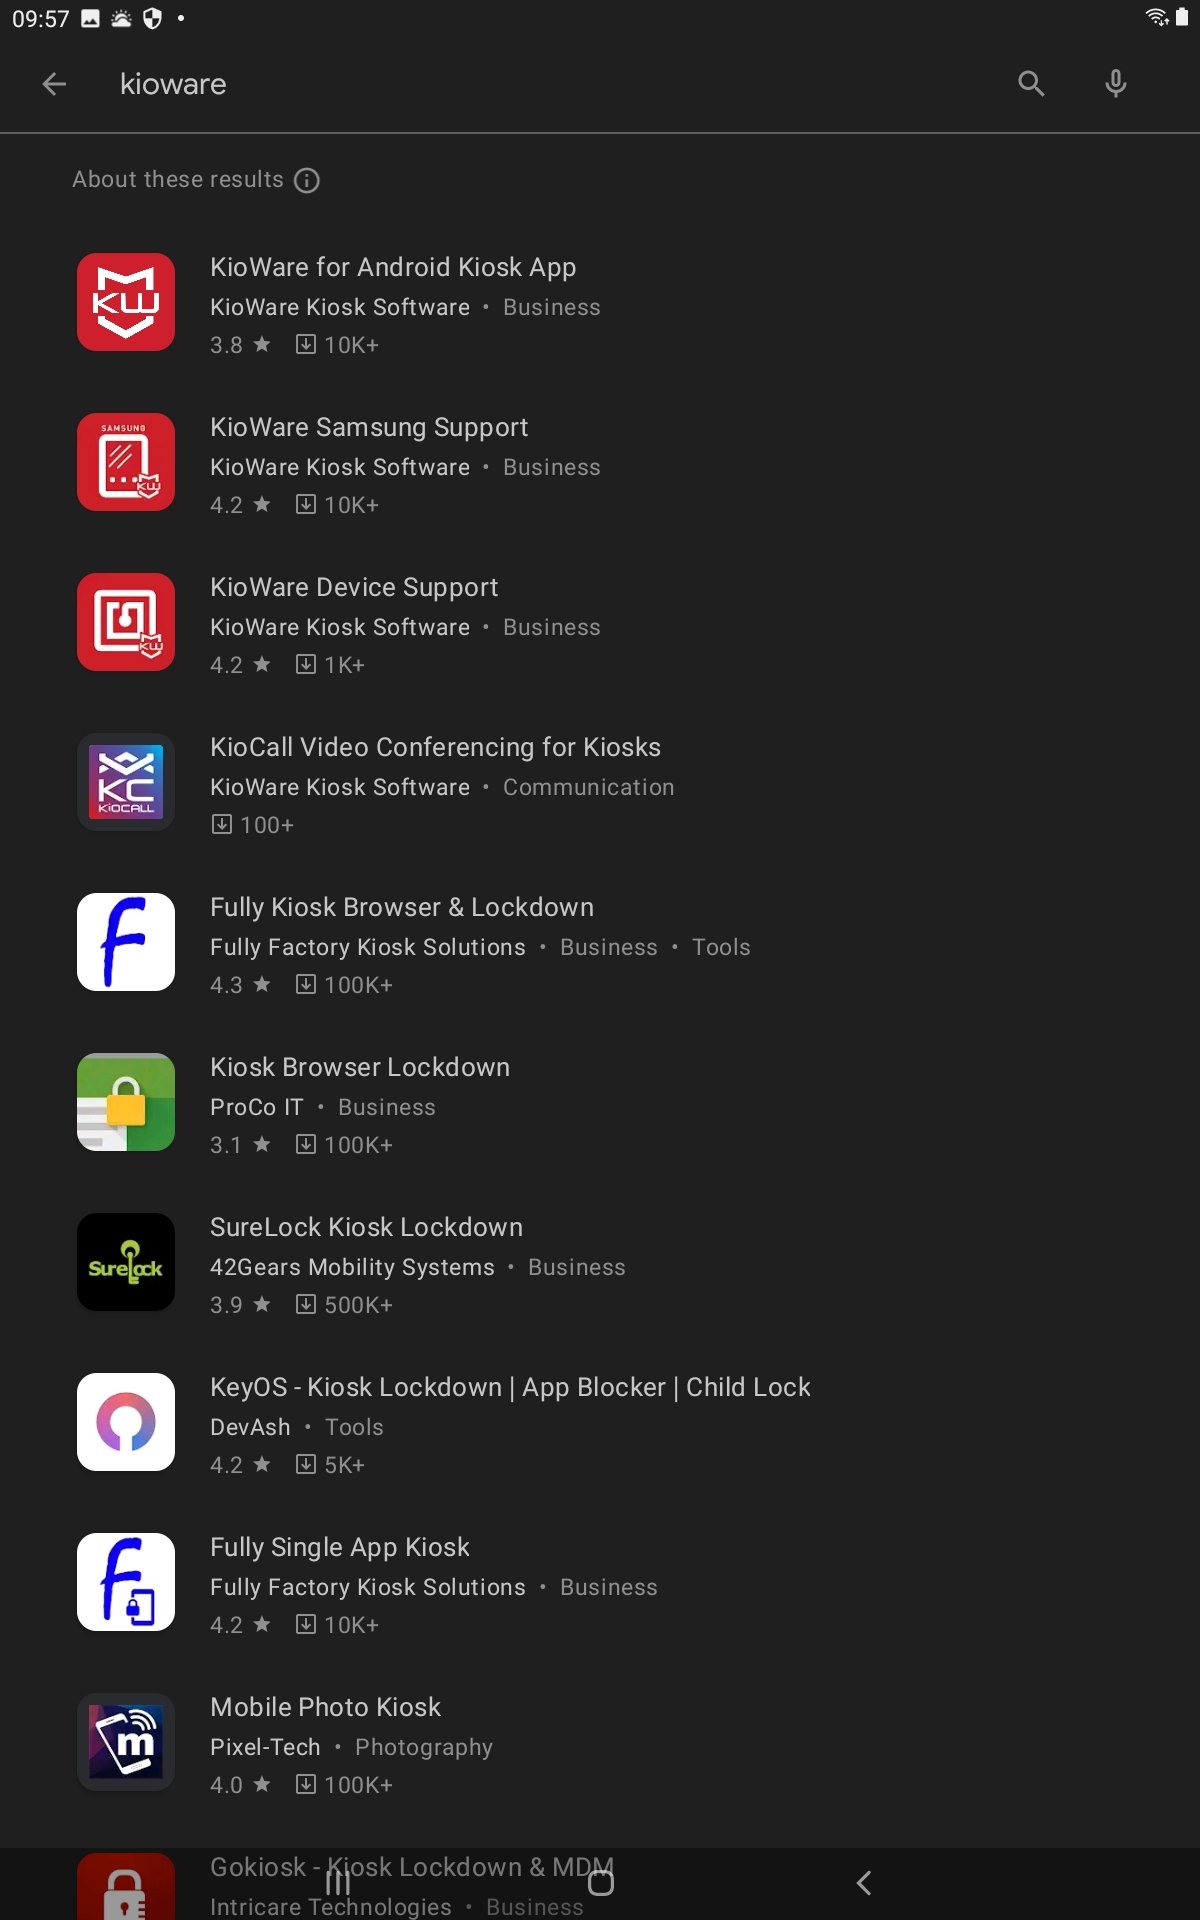 Android tablet play store kioware app list